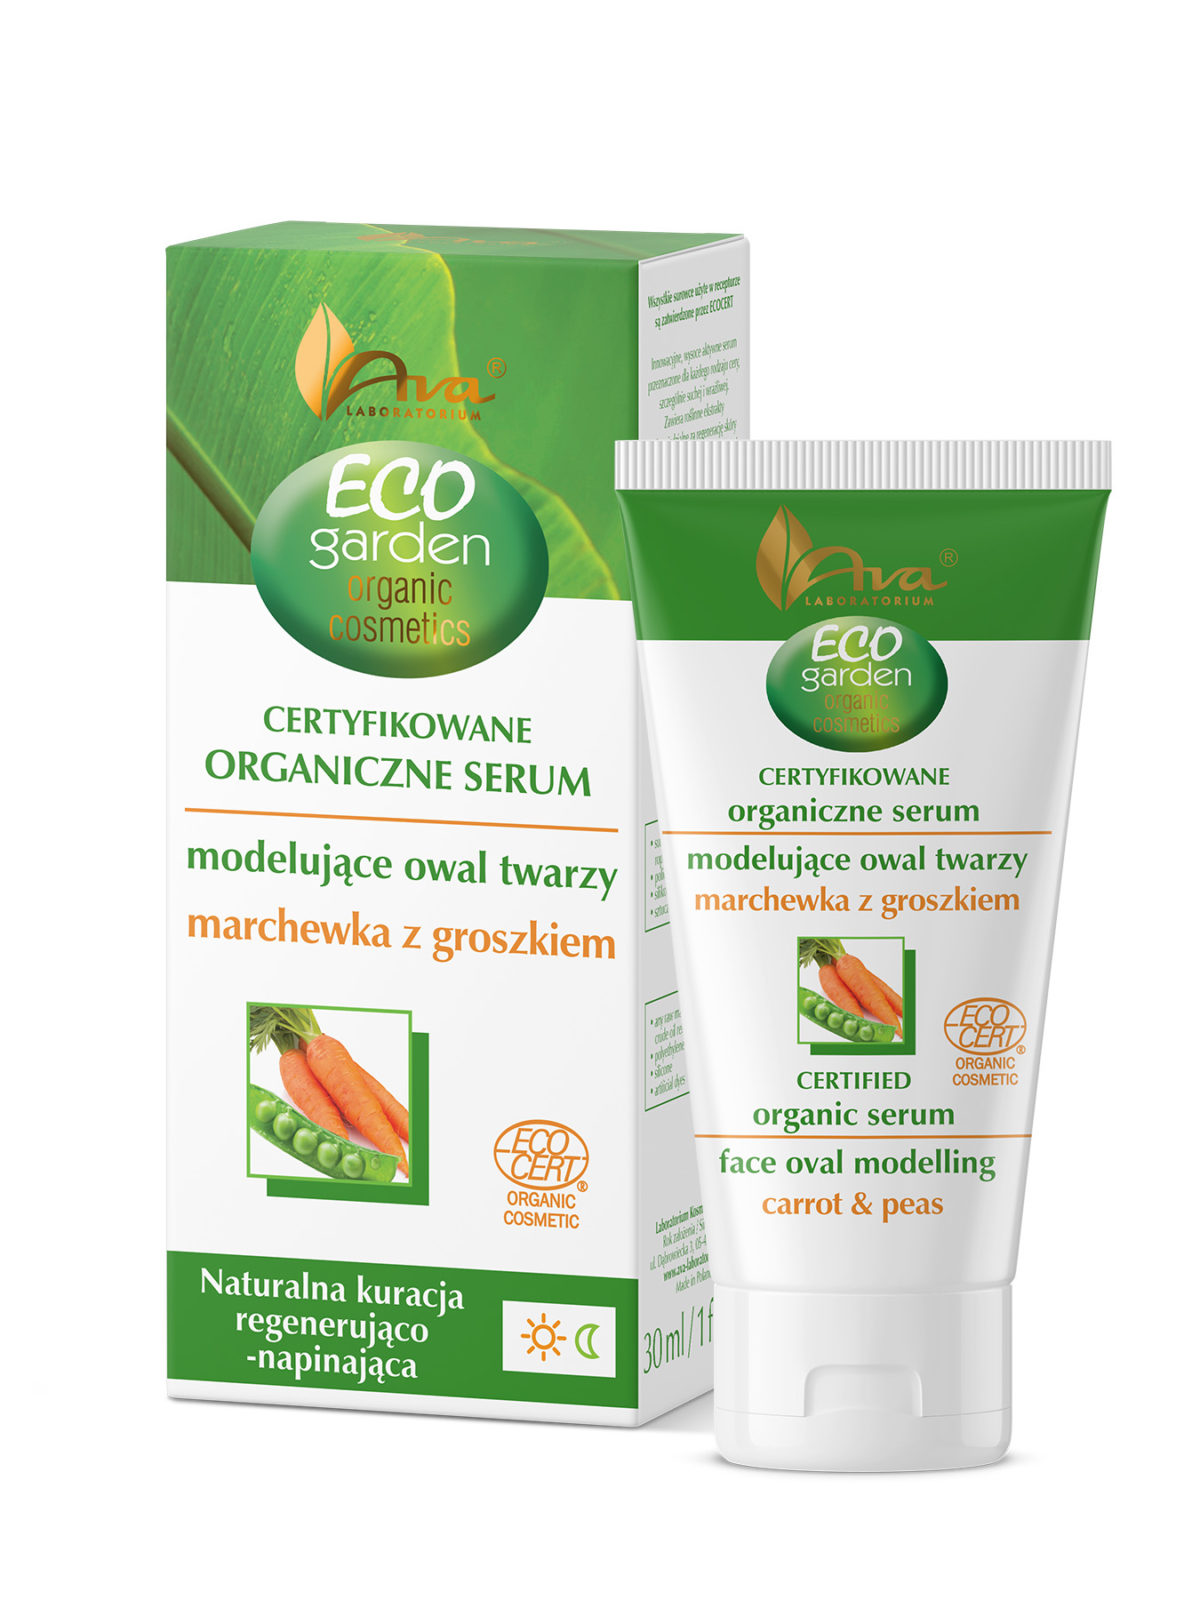 ECO GARDEN Certifed Organic face oval modelling serum carrot & peas